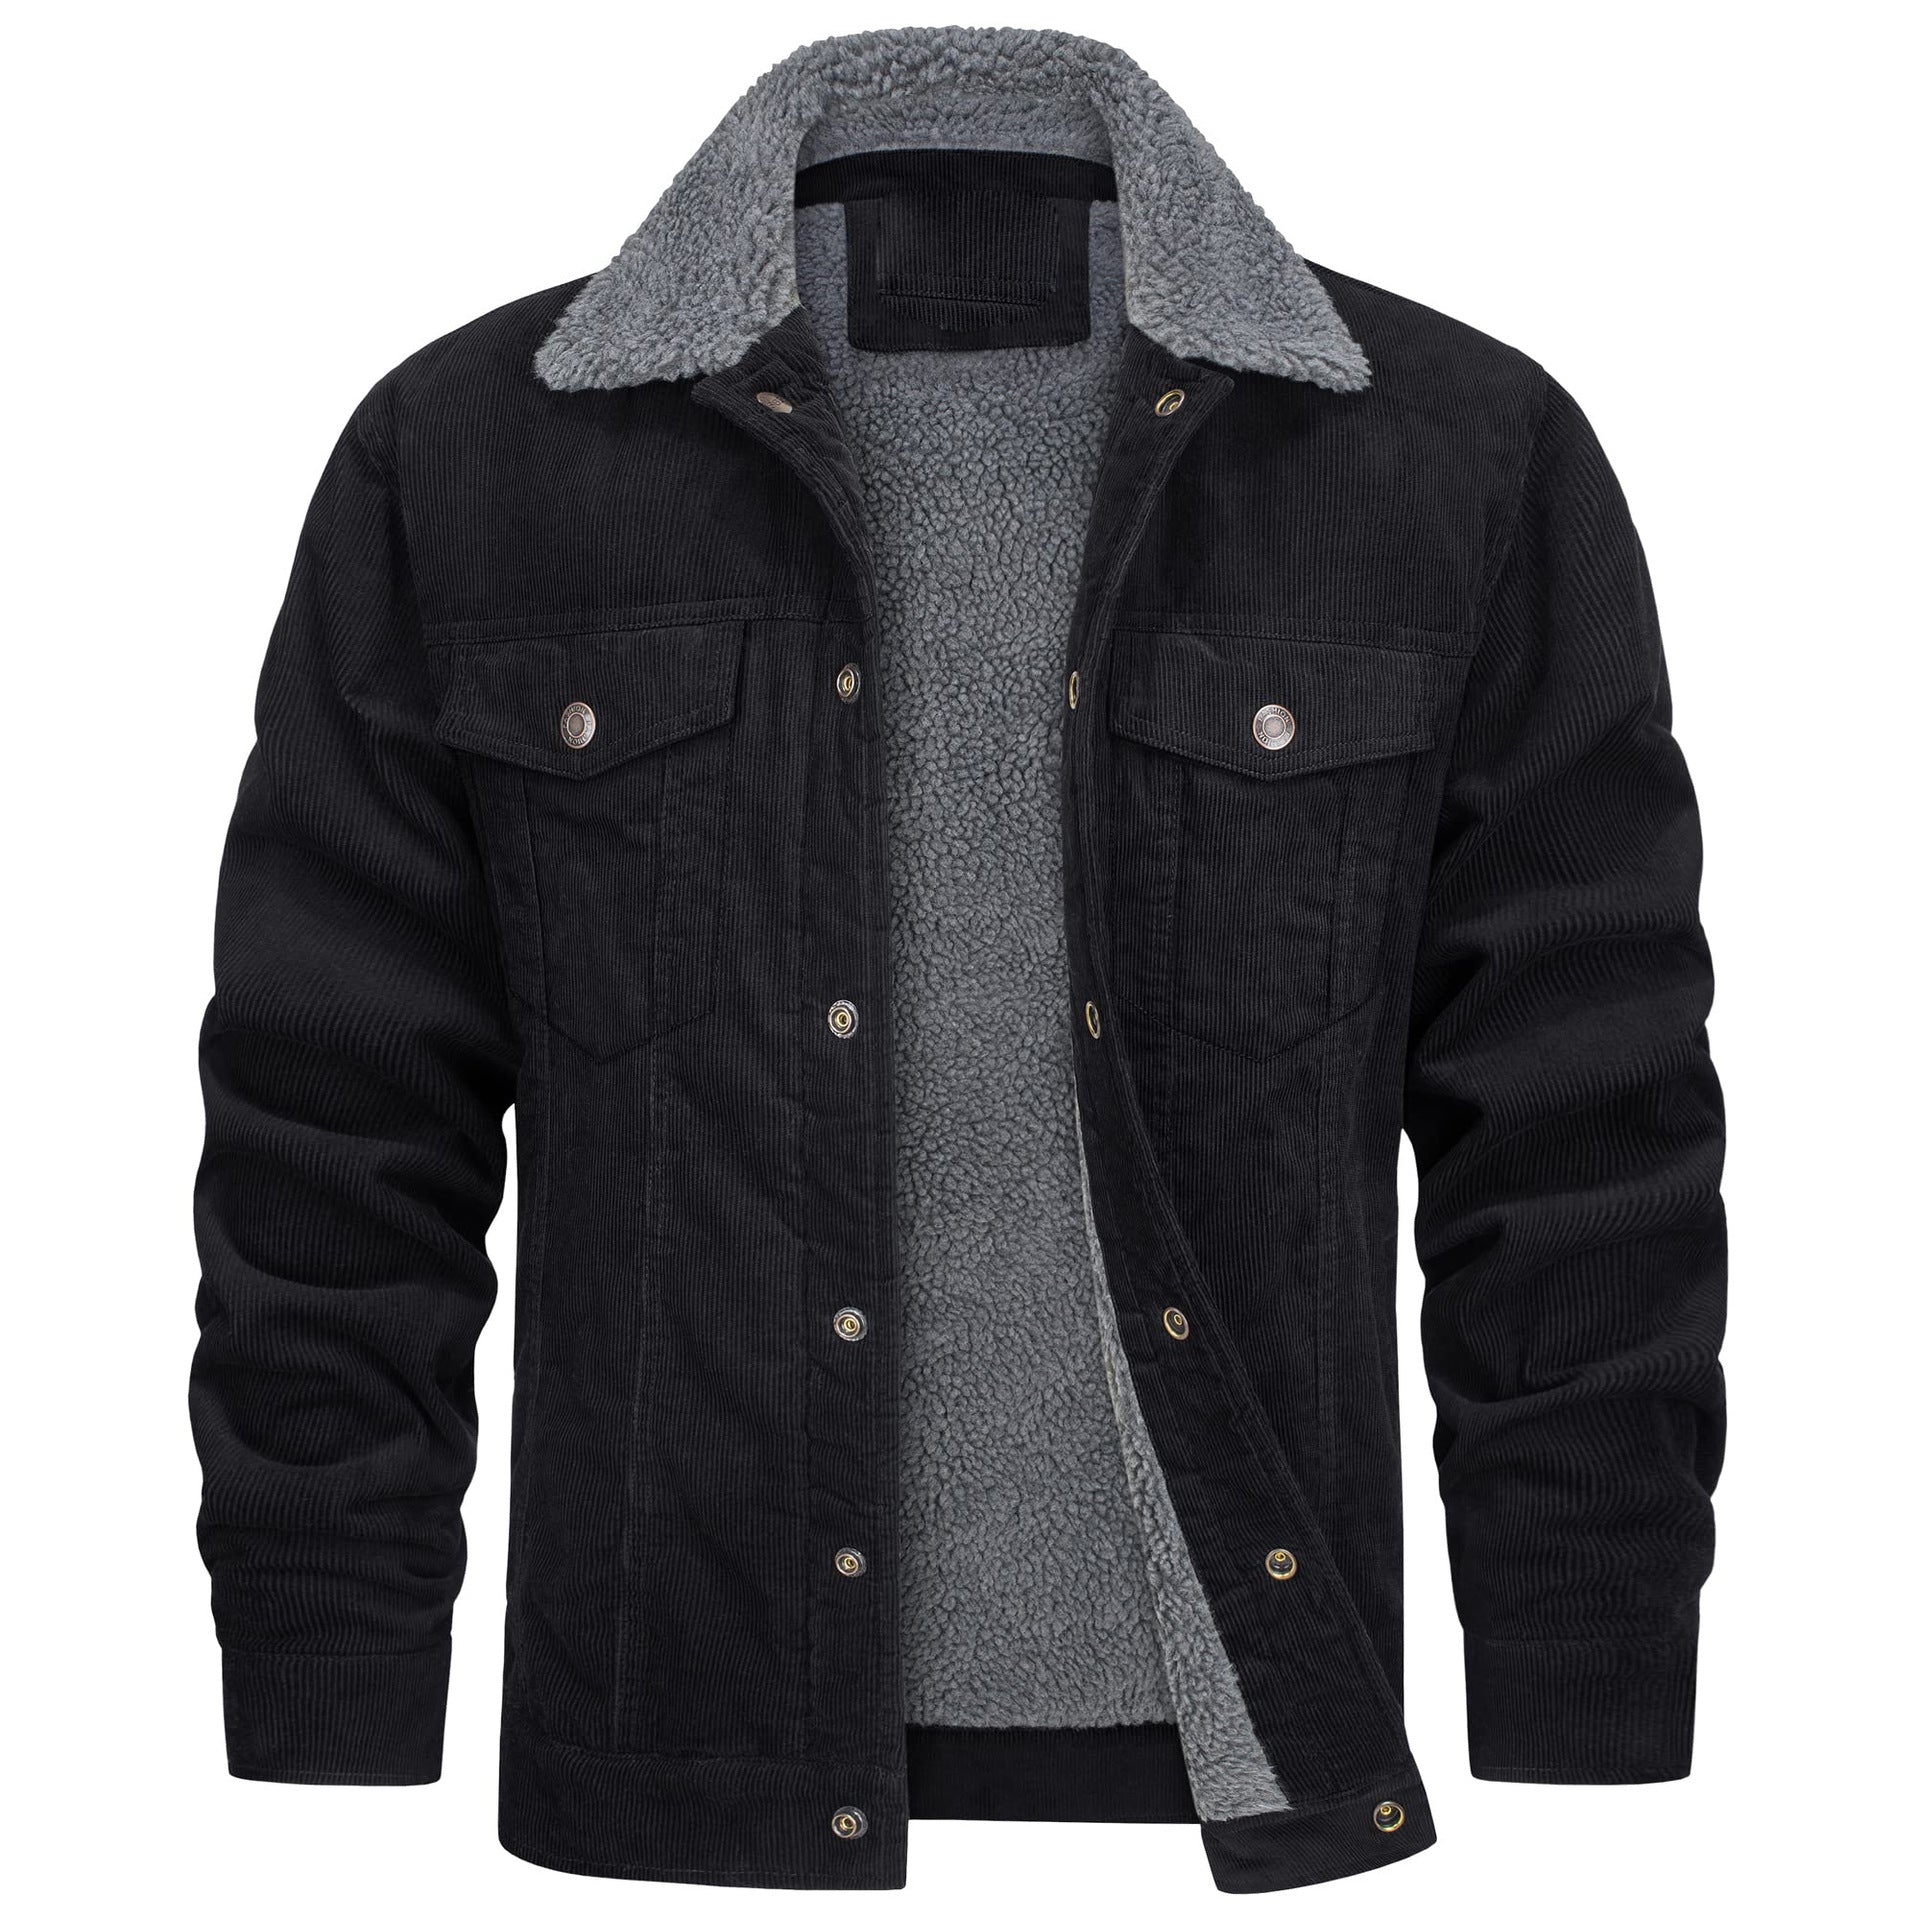 Casual Winter Long Sleeves Velvet Jacket Coats for Men-Coats & Jackets-Black-2-S-Free Shipping Leatheretro